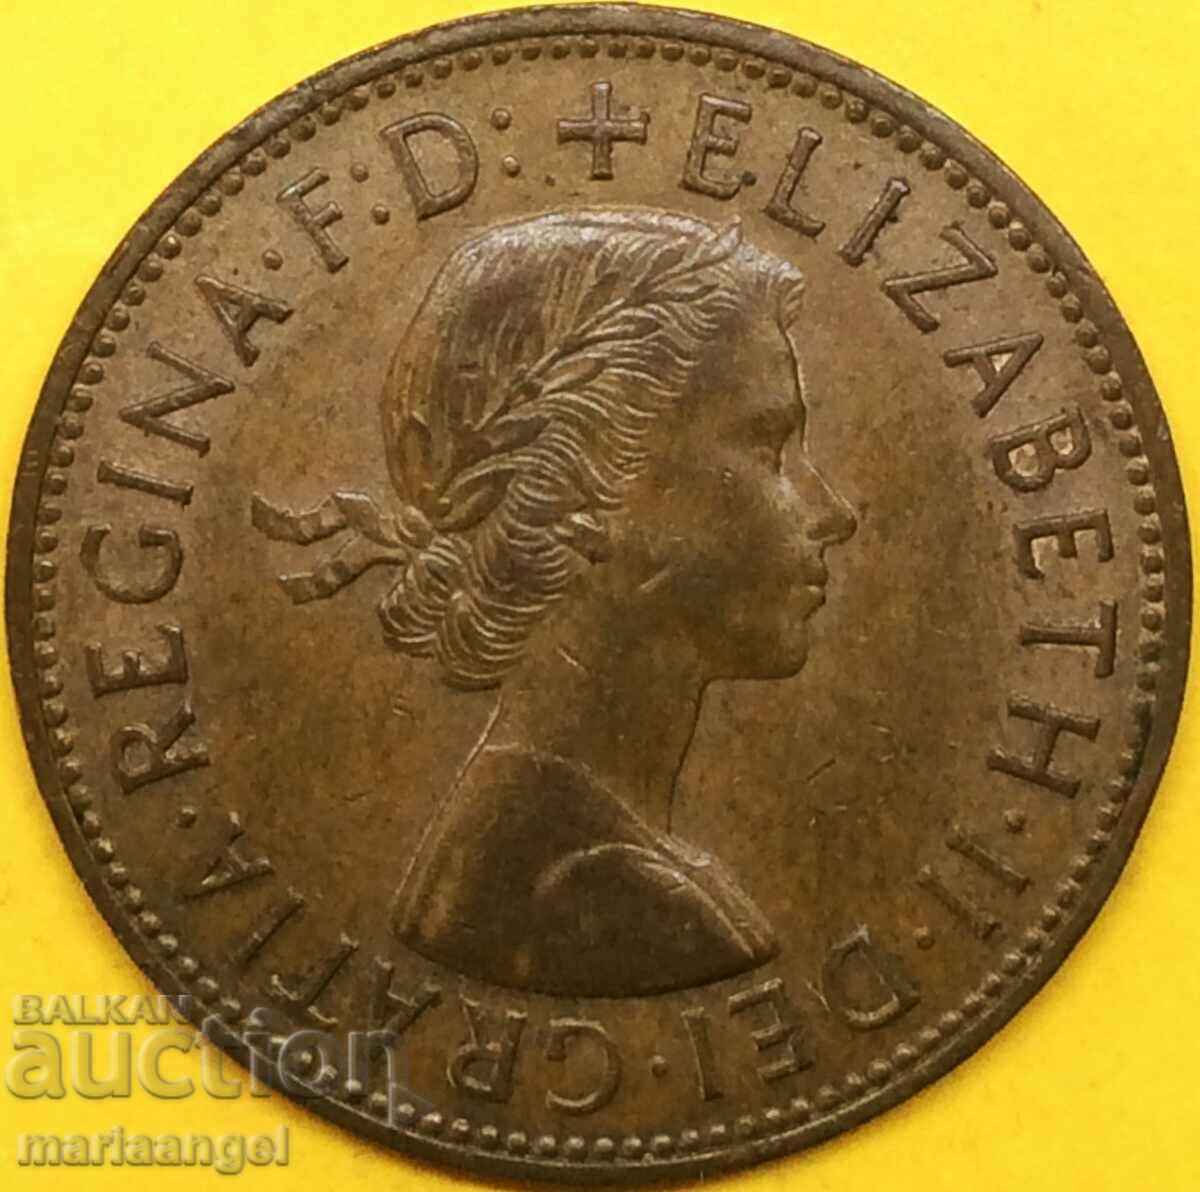 Great Britain 1 penny 1967 30mm bronze